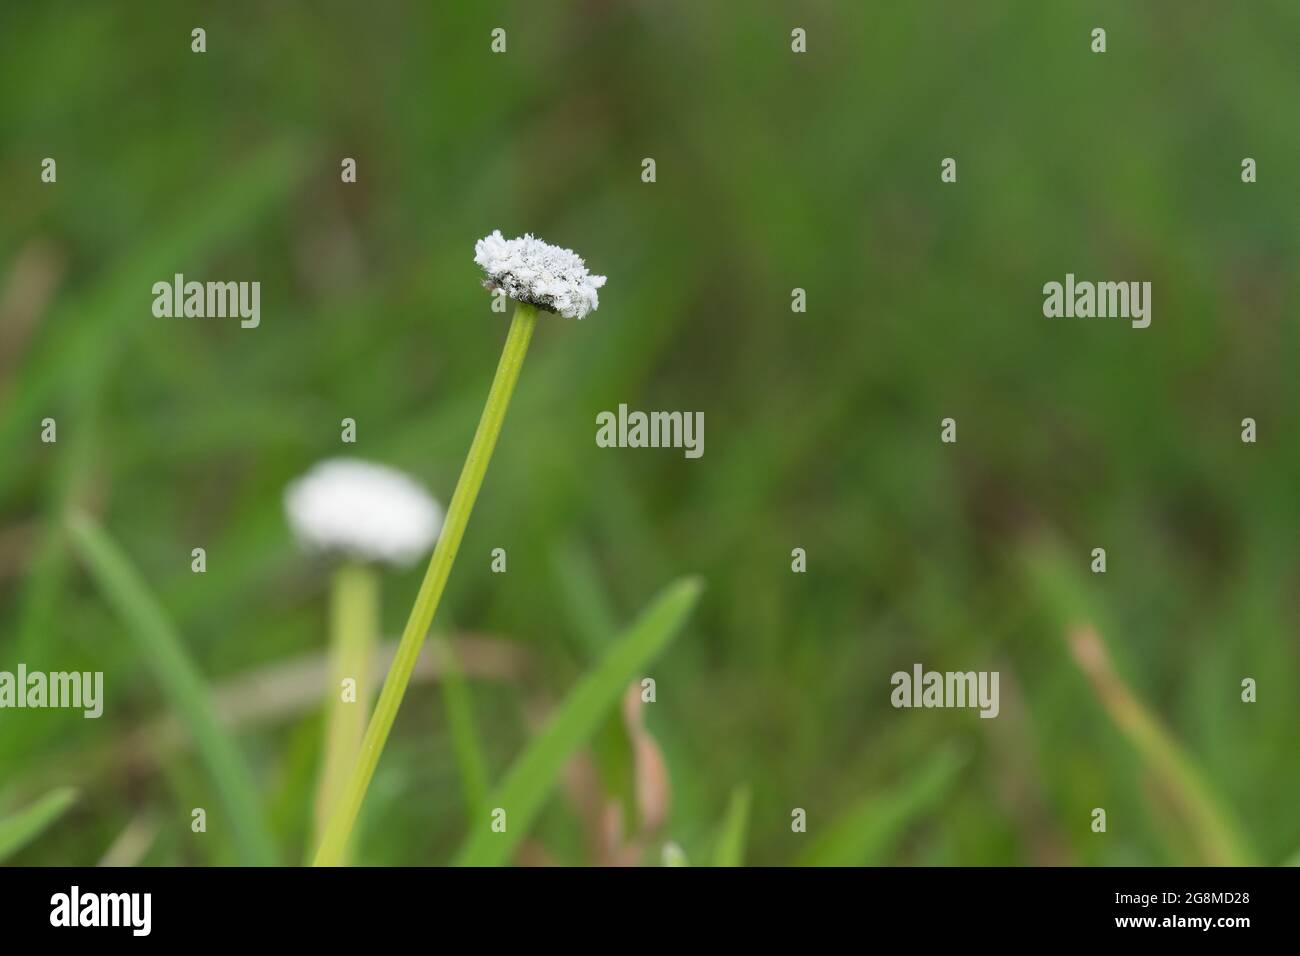 White flower of Eriocaulon nudicuspe against green grass background Stock Photo